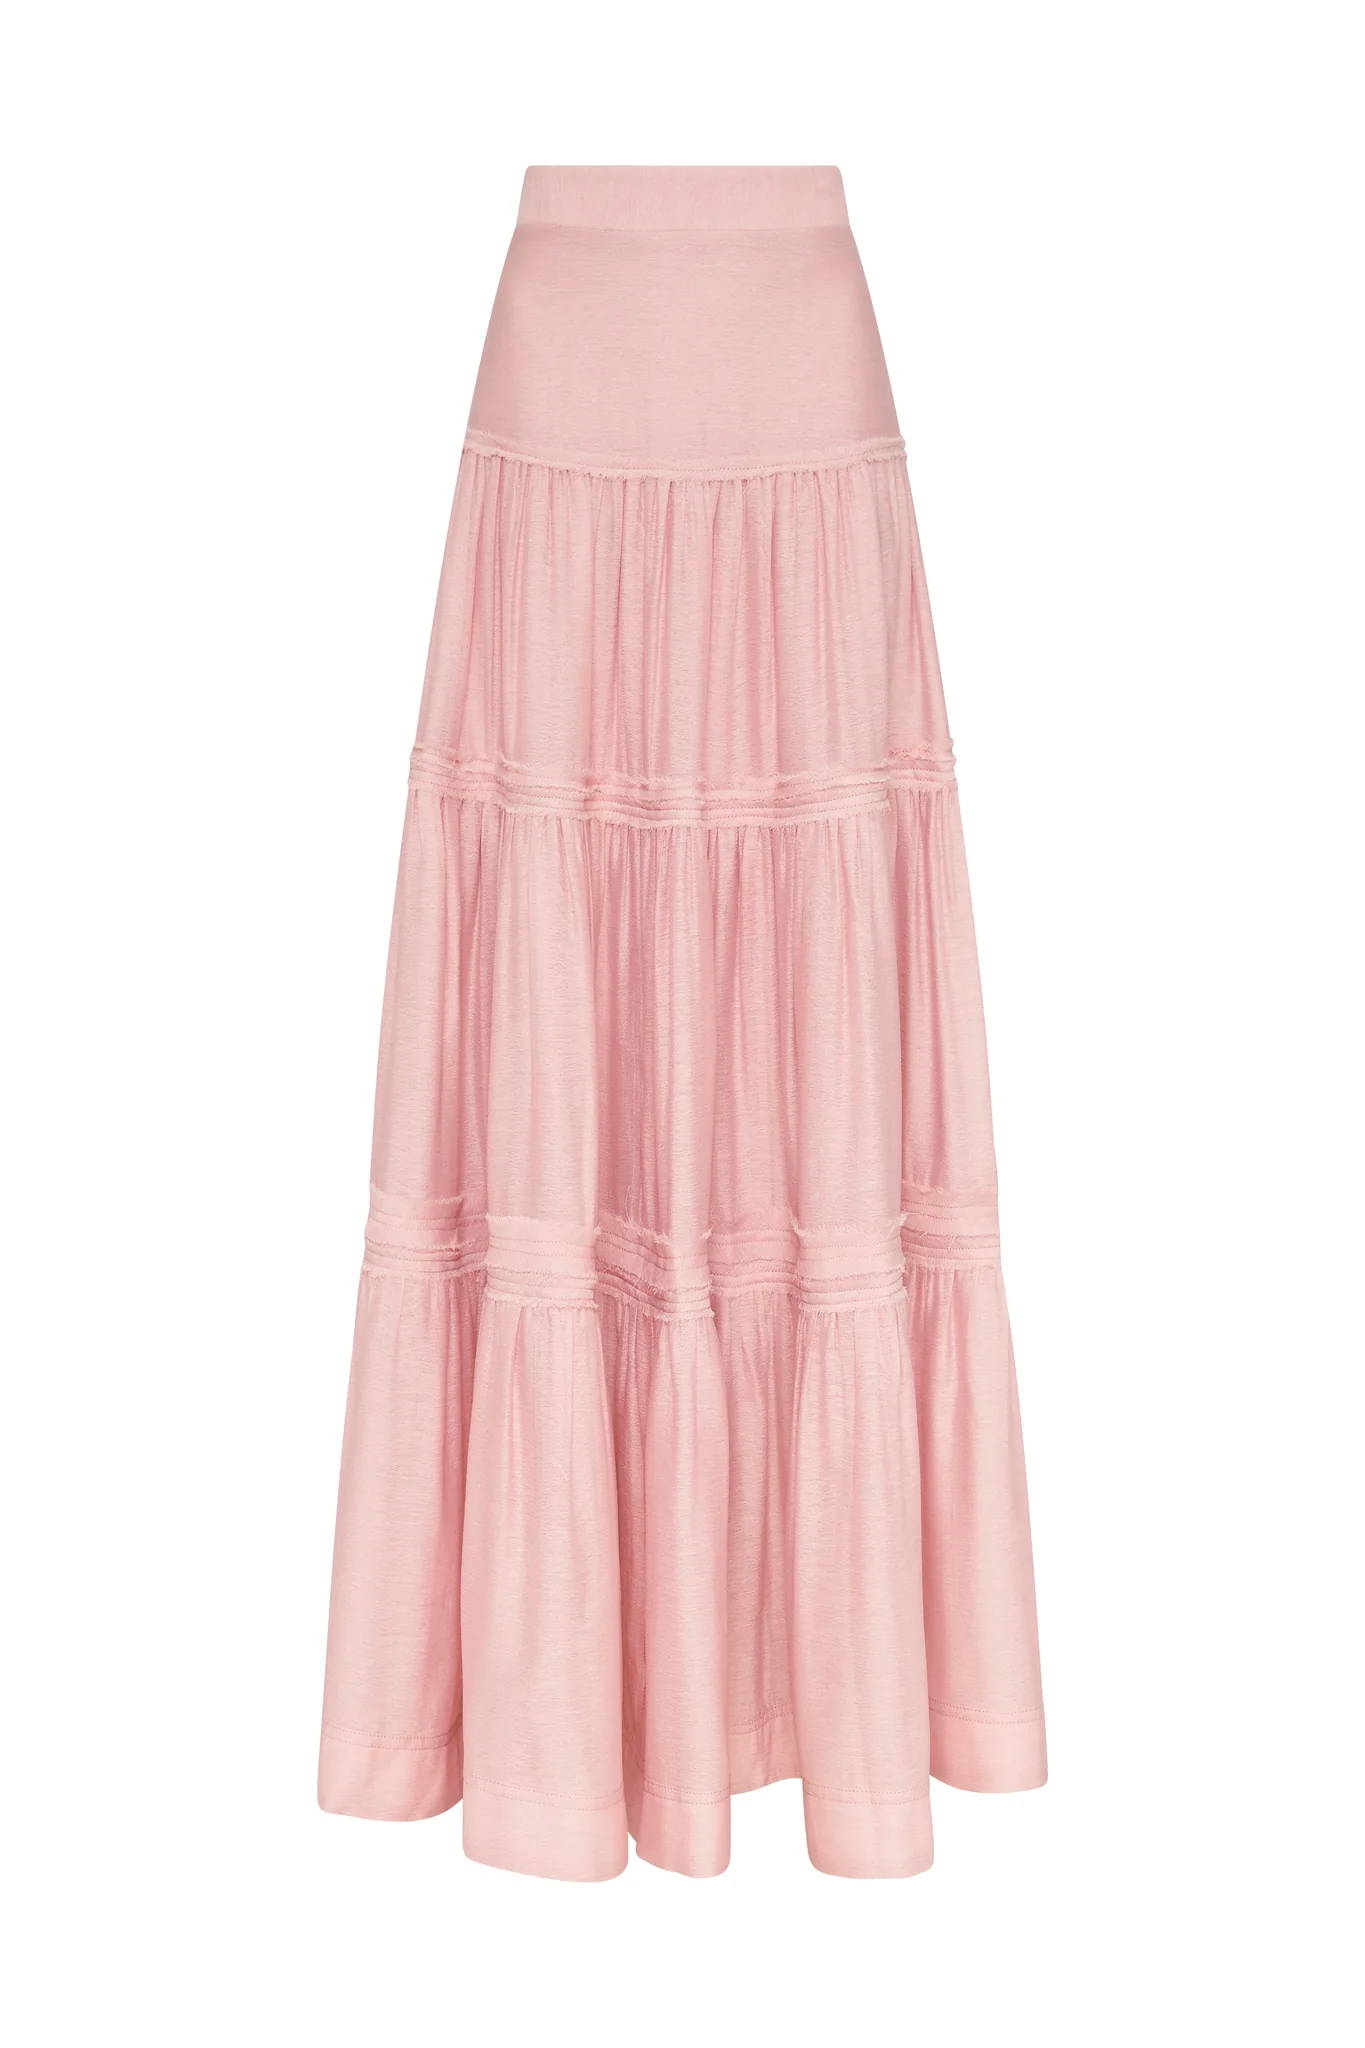 Dusty pink maxi skirt